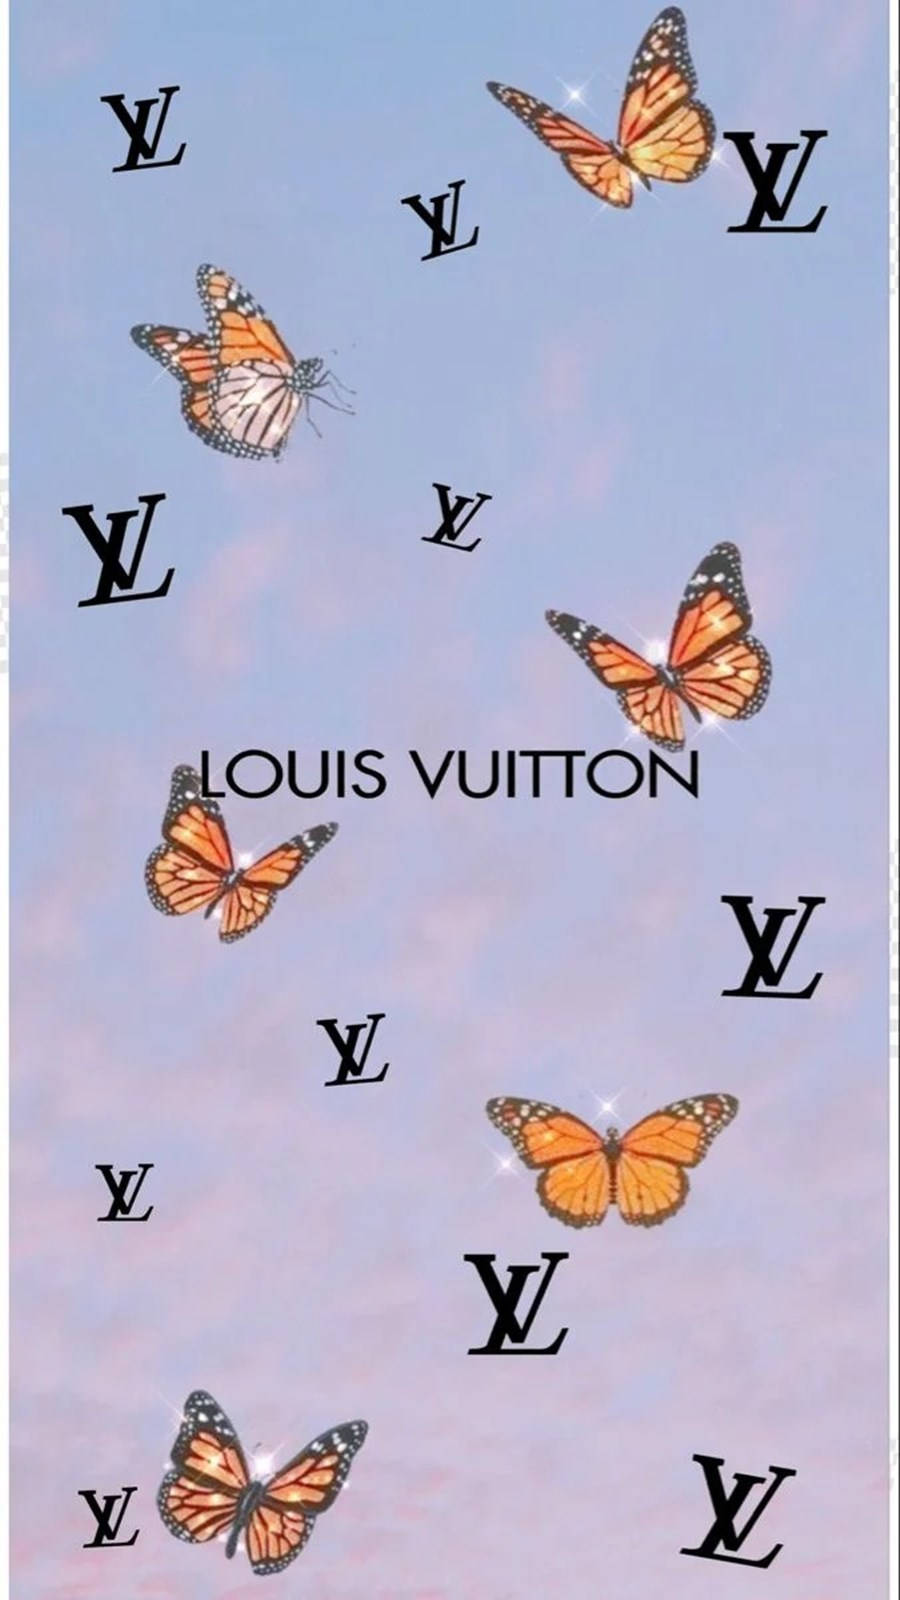 Louis Vuitton Aesthetic Background  2021  Monogram wallpaper Louis  vuitton iphone wallpaper Iphone wallpaper tumblr aesthetic